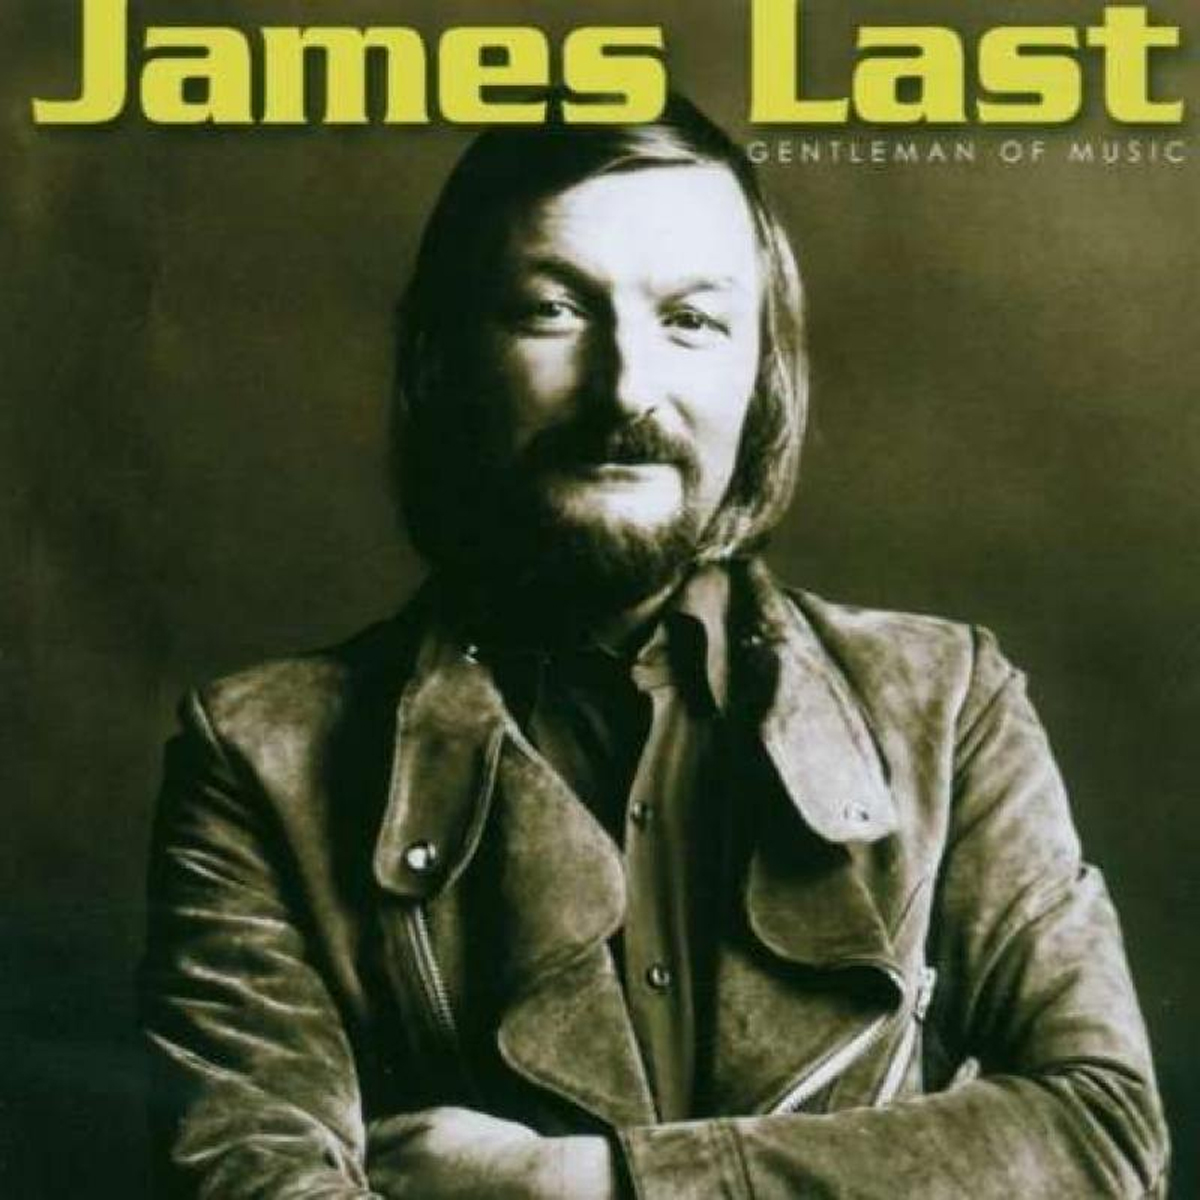 Last little man. James last Orchestra обложки. James last альбом.